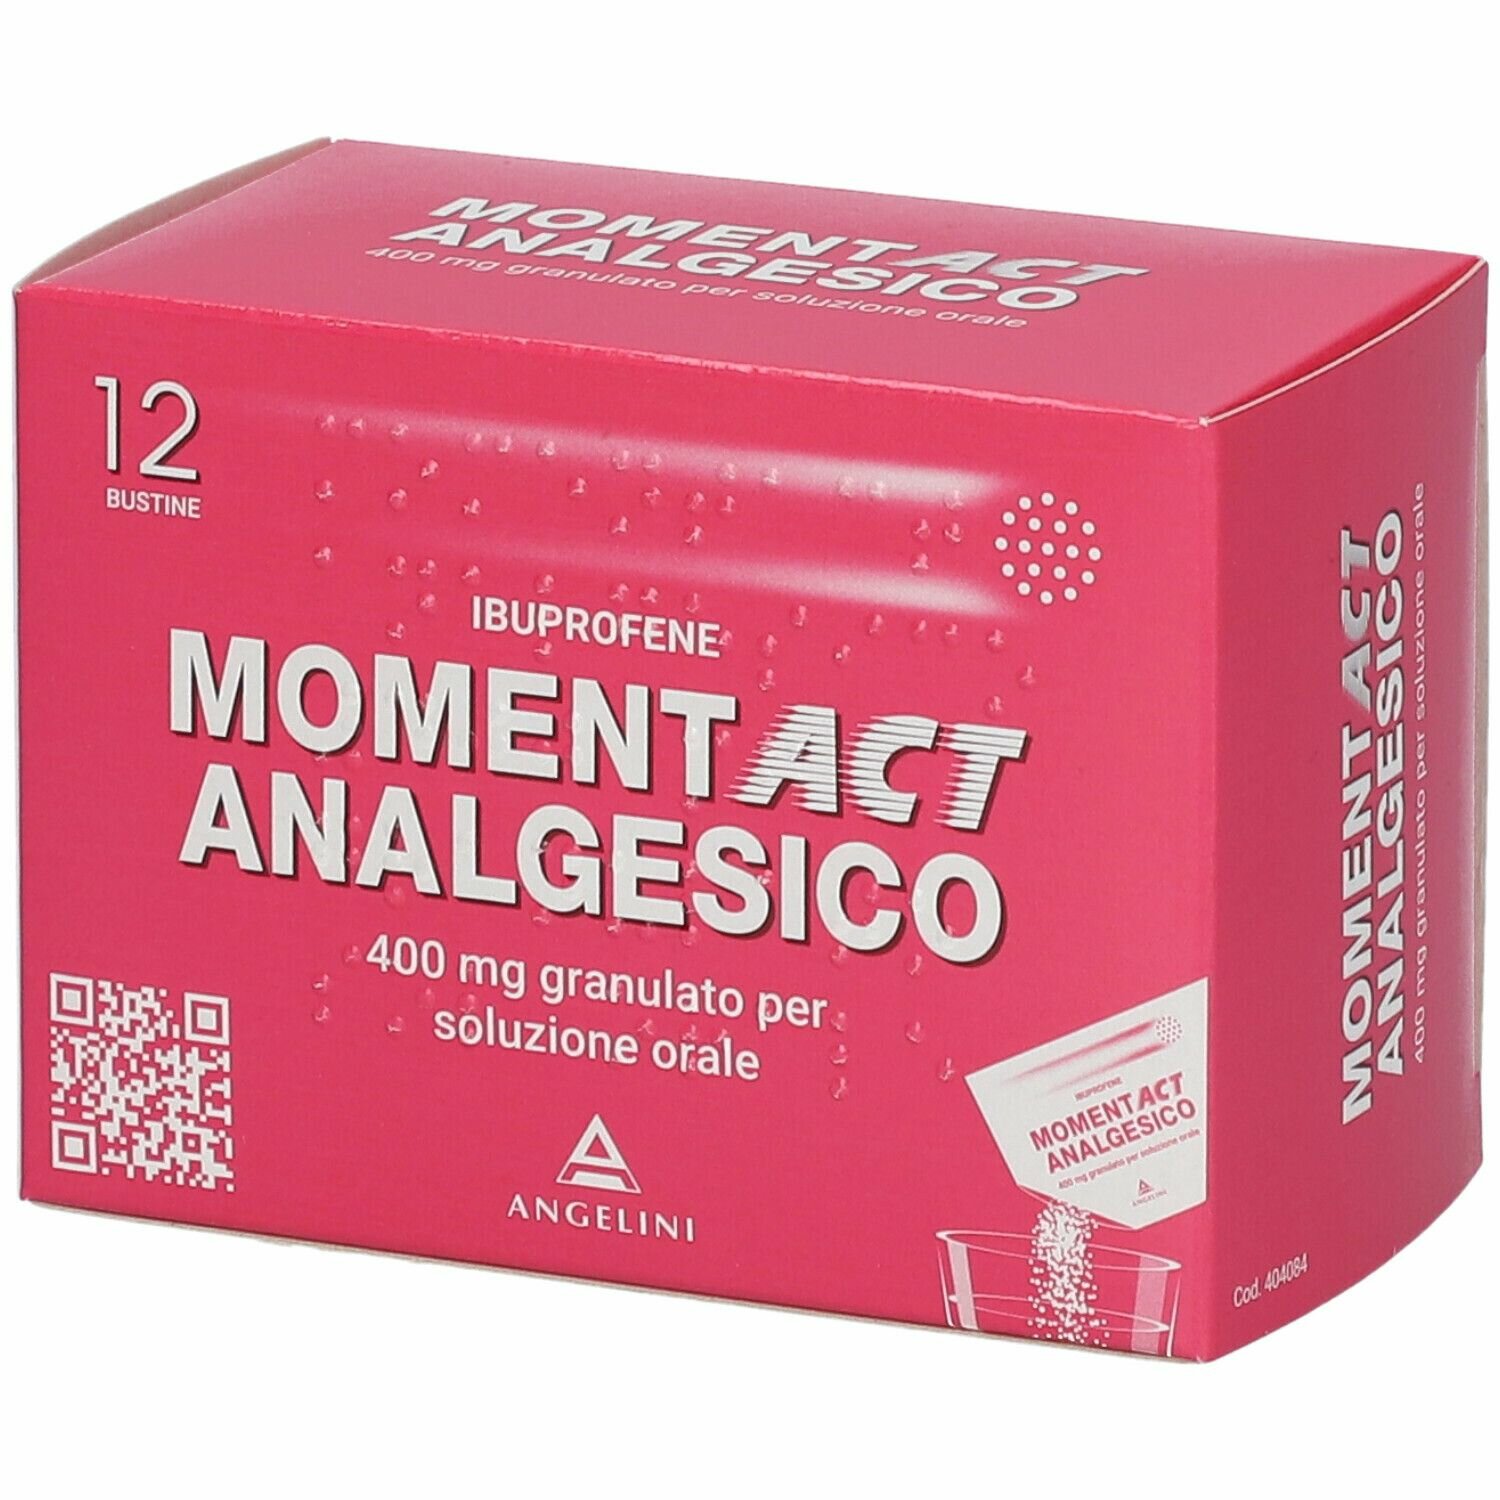 Momentact analgesico granulato ibuprofene 12 bustine img